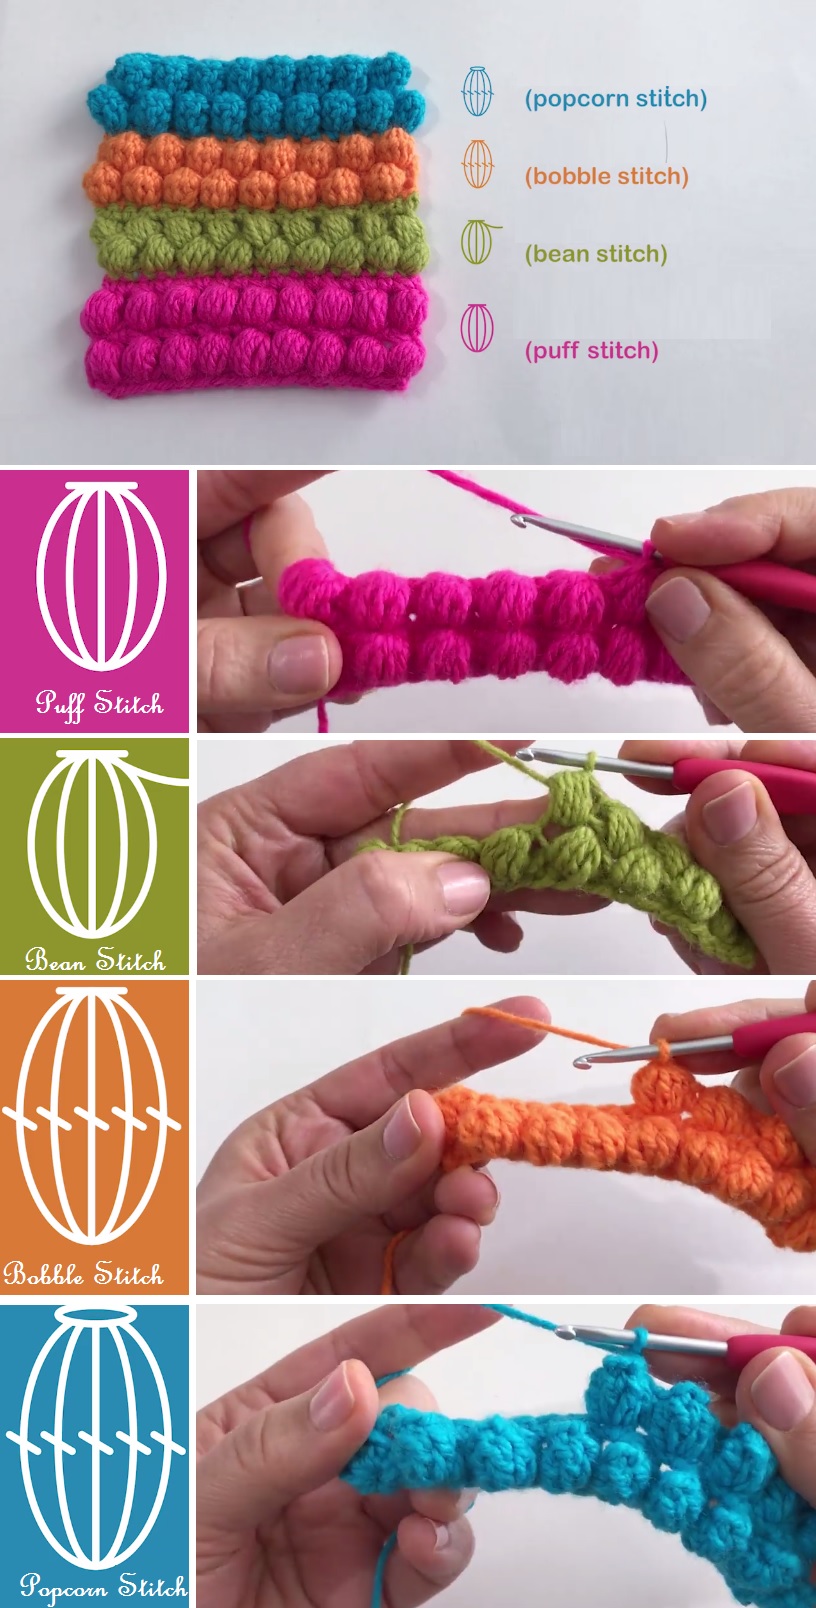 Crochet Stitches – Puff, Bean, Bobble, Popcorn - Crochet Home